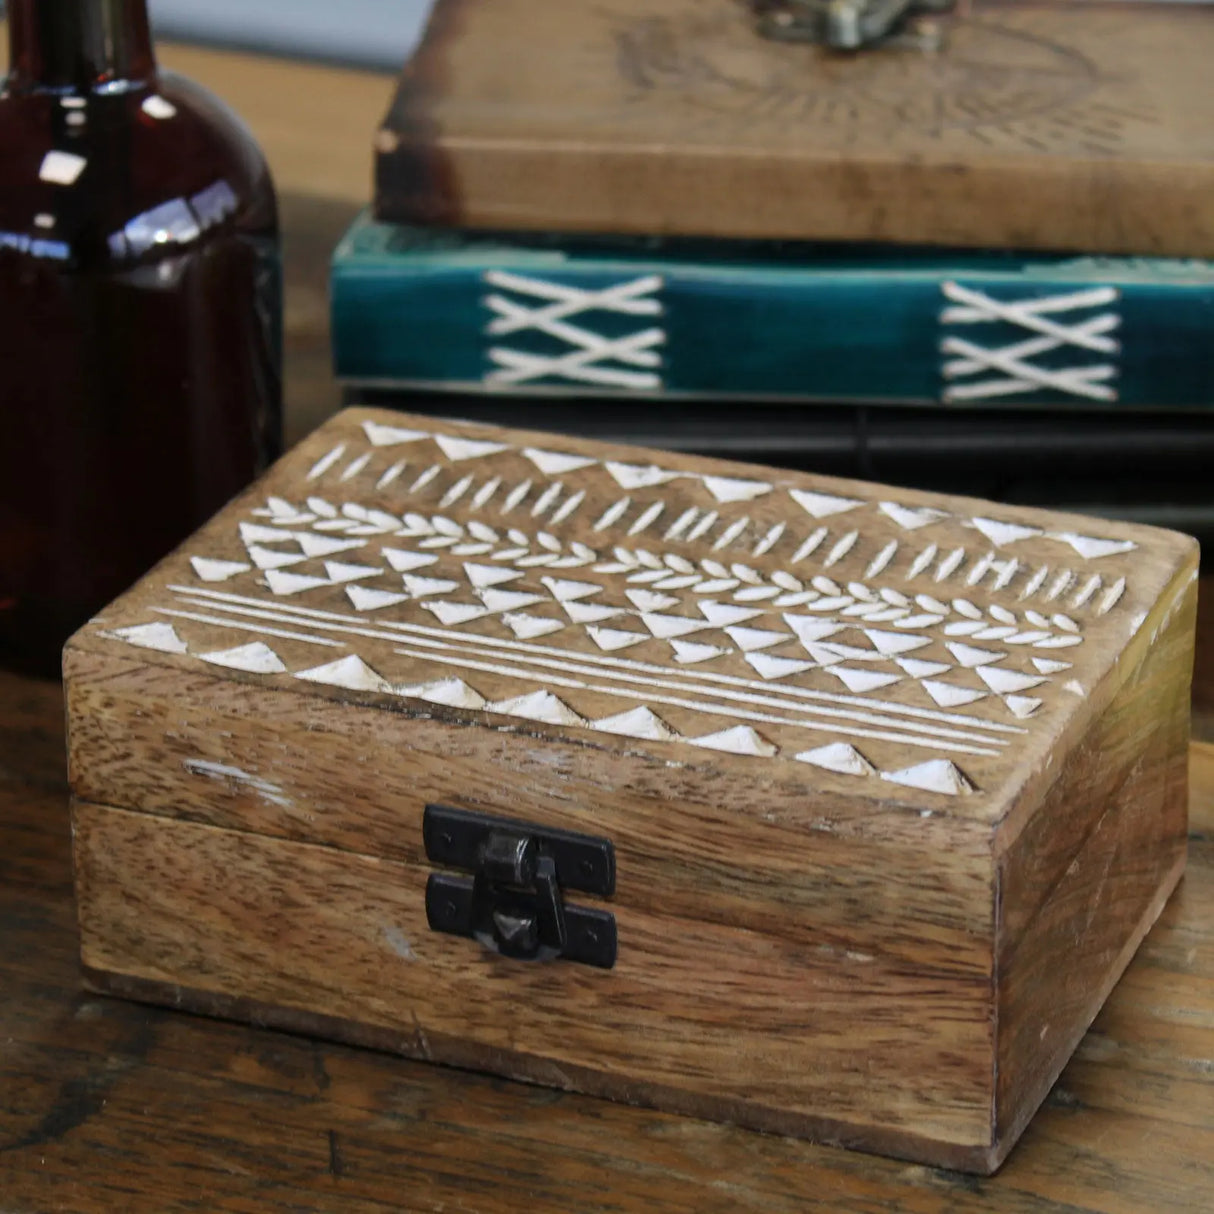 White Washed Wooden Box - 6x4 Aztec Design